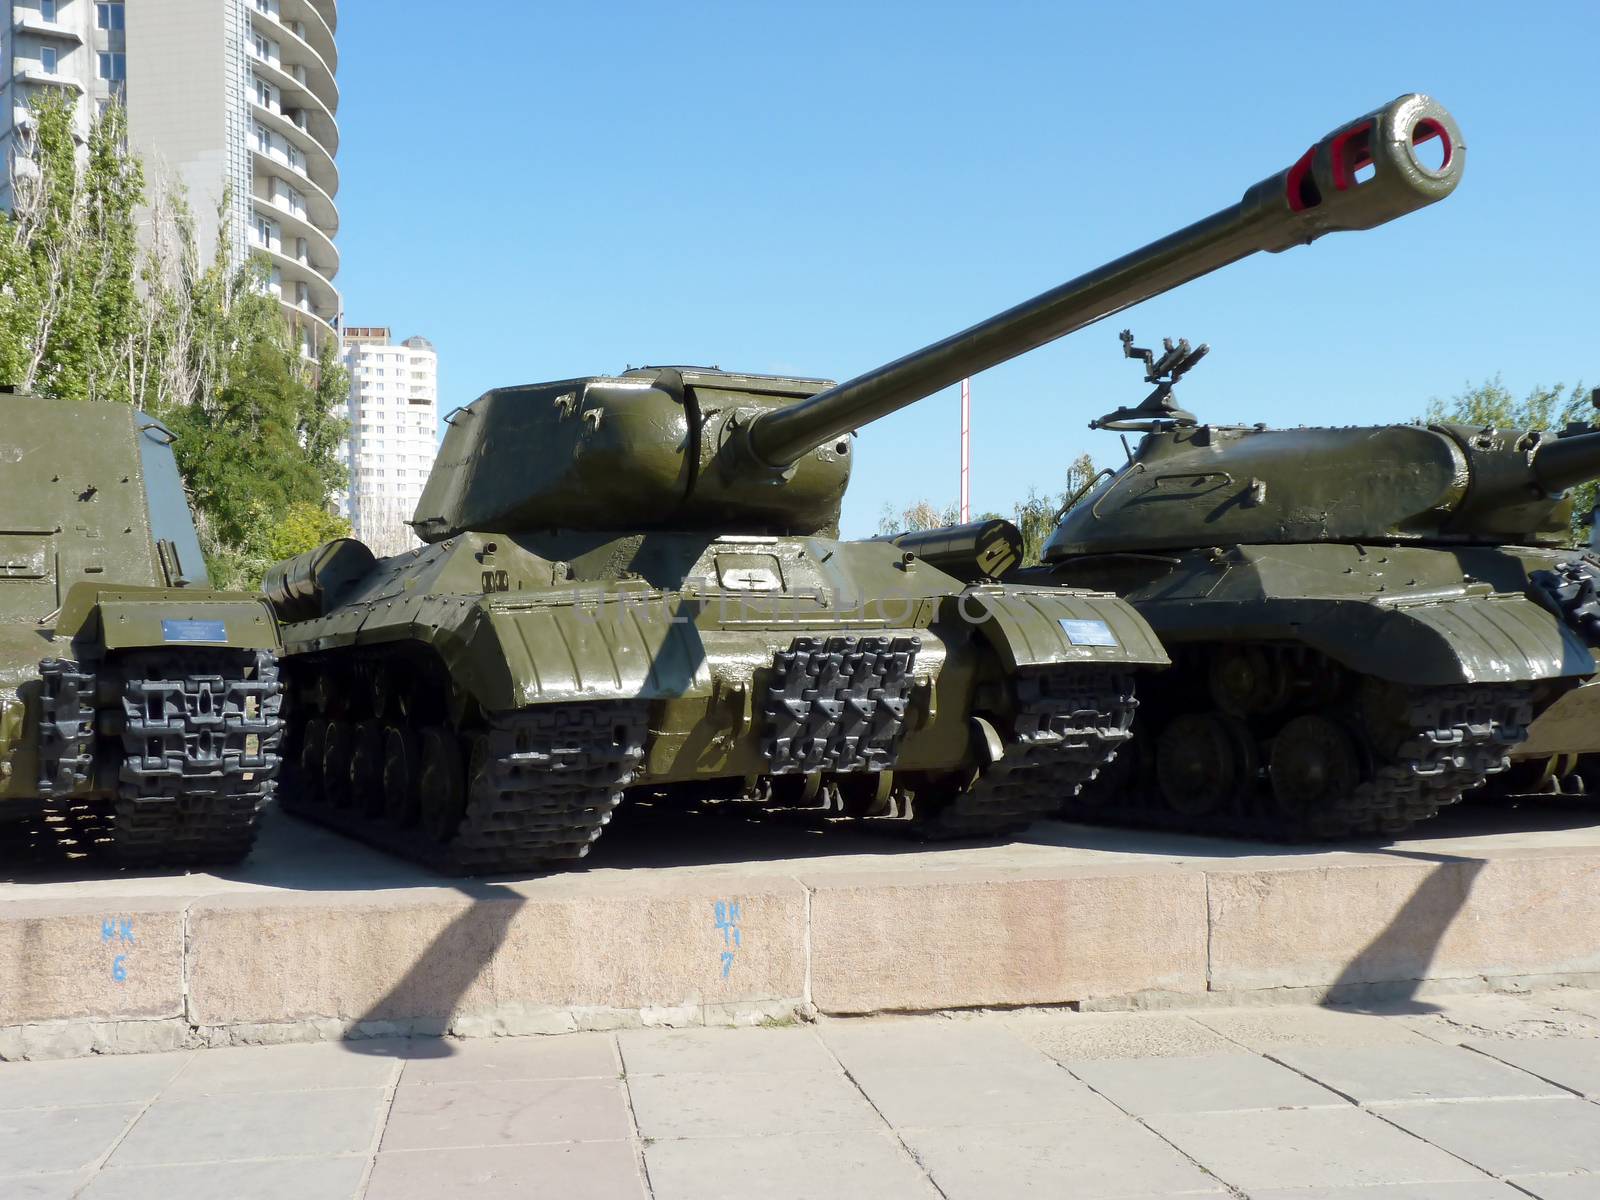 Soviet heavy IS-2 tank by Vadimdem